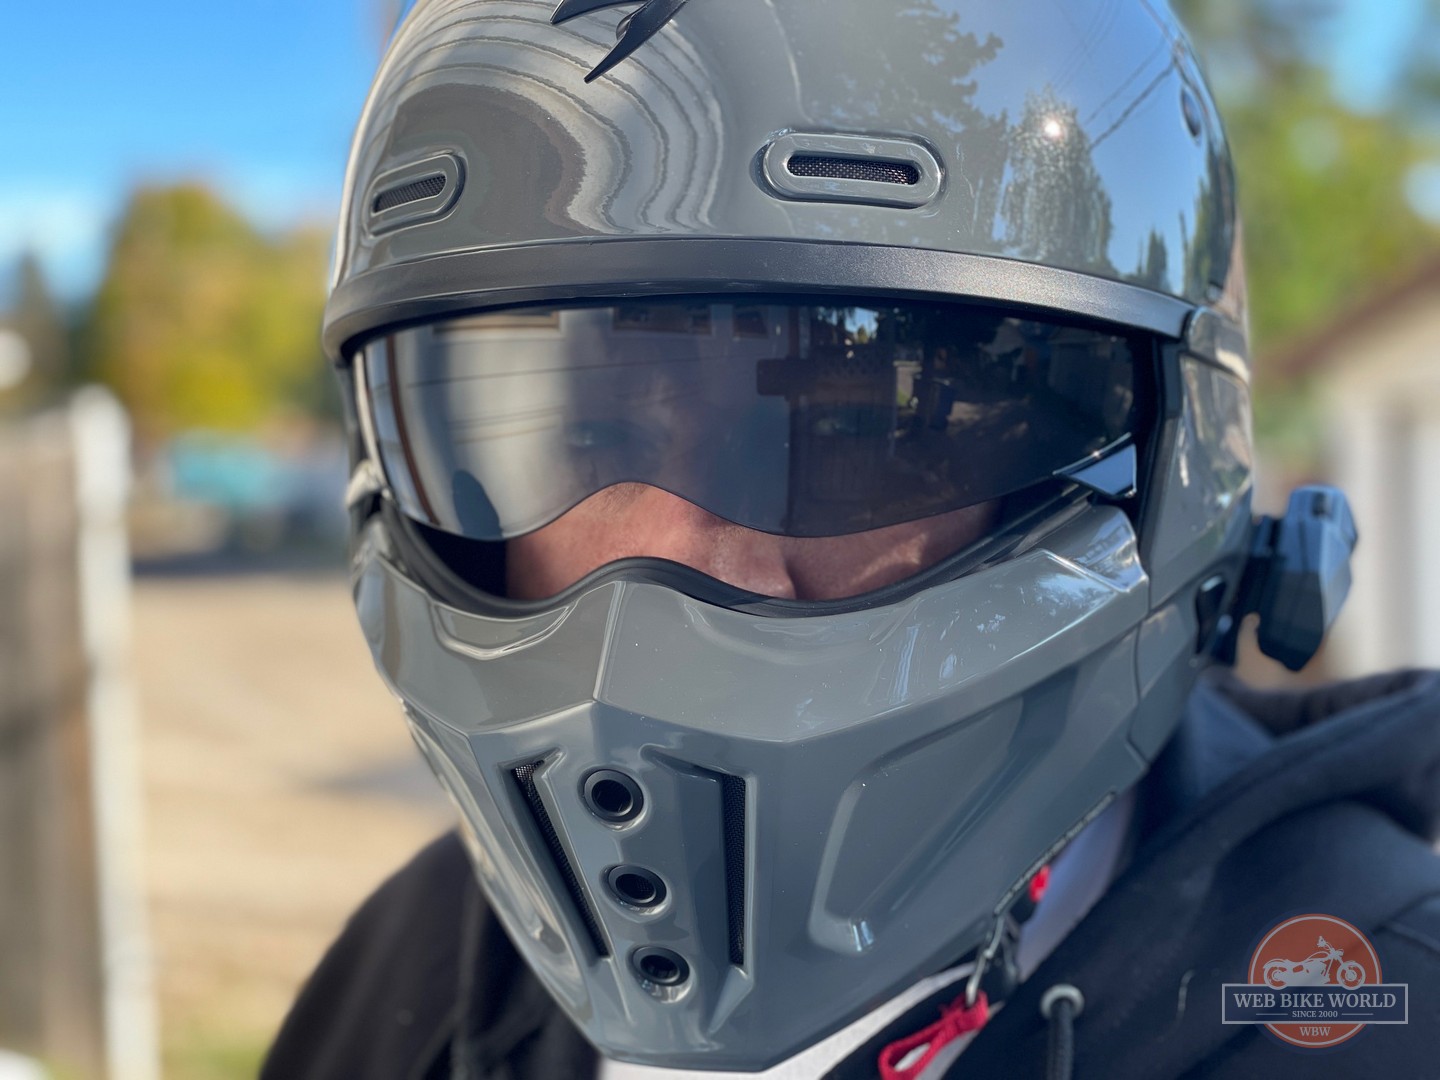 Scorpion EXO Combat Plain Solid Matt Black Urban Open Face Motorcycle Helmet